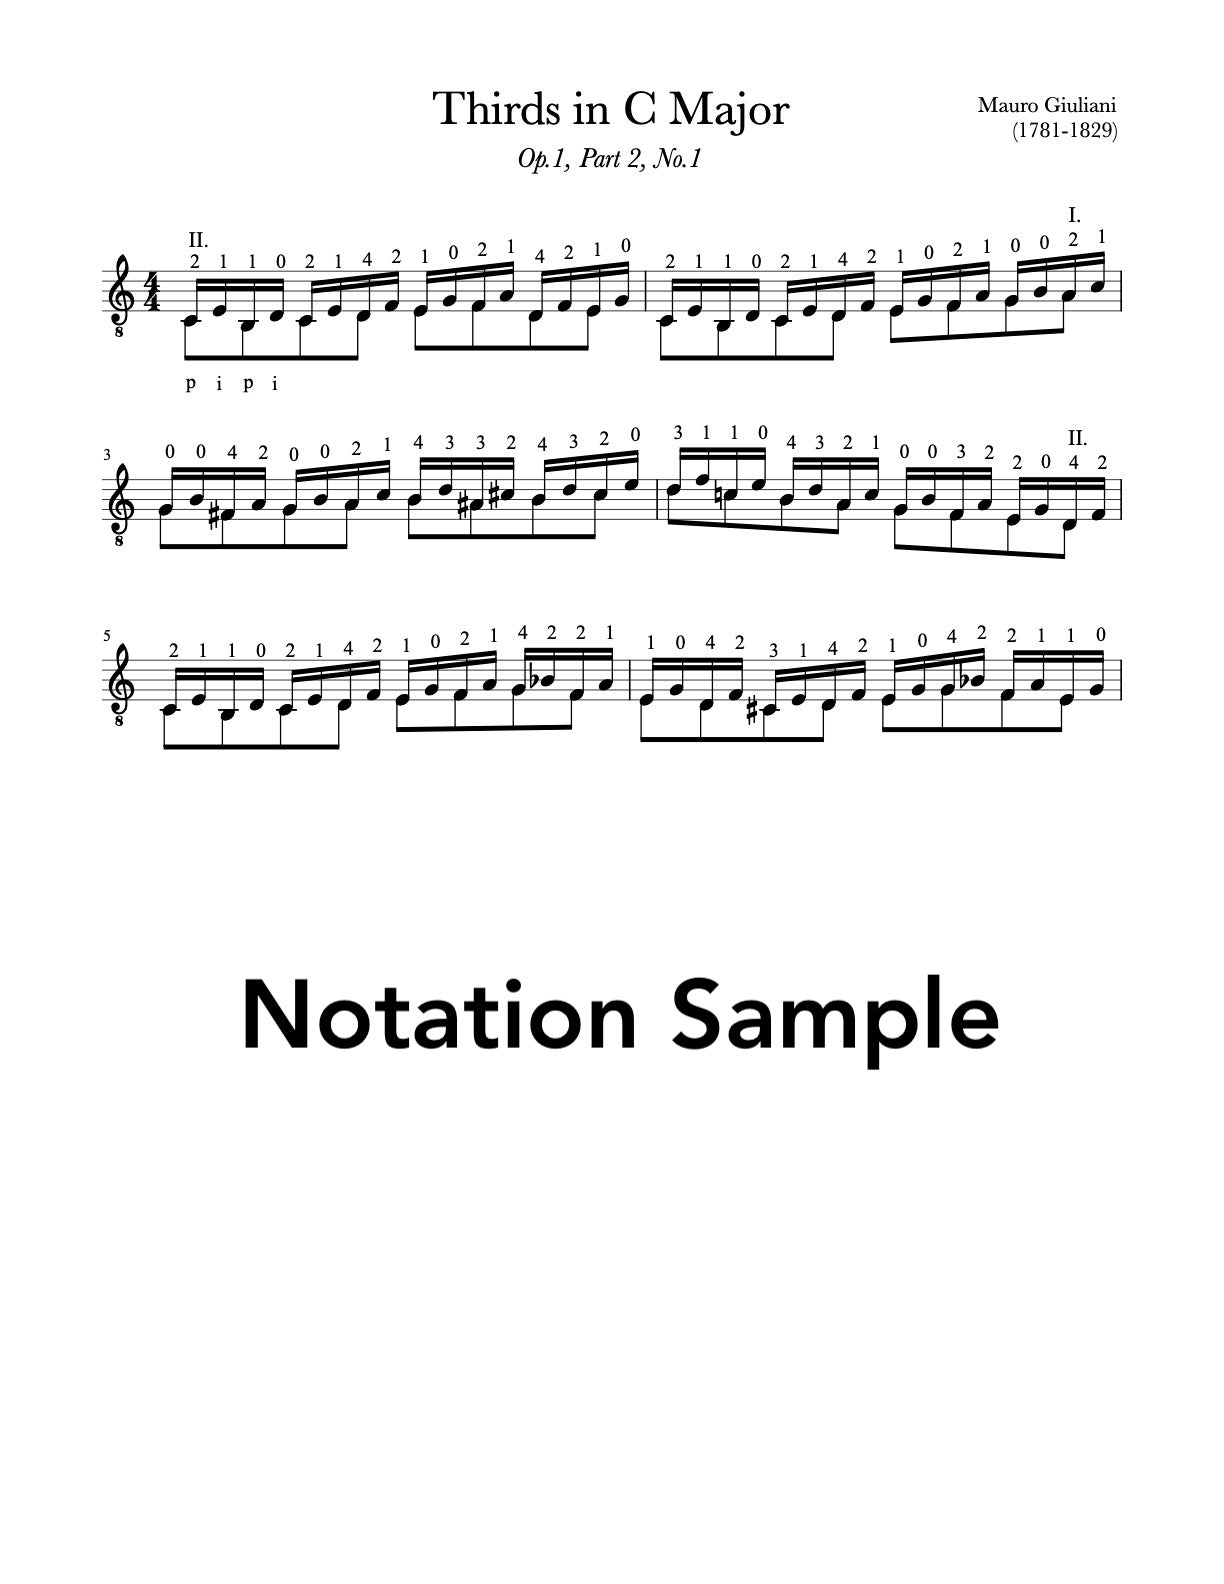 Giuliani Left Hand Interval Studies, Op.1, Part 2 (Notation Sample))